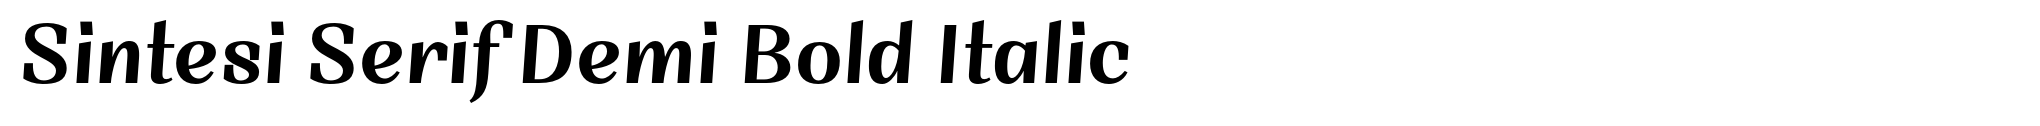 Sintesi Serif Demi Bold Italic image